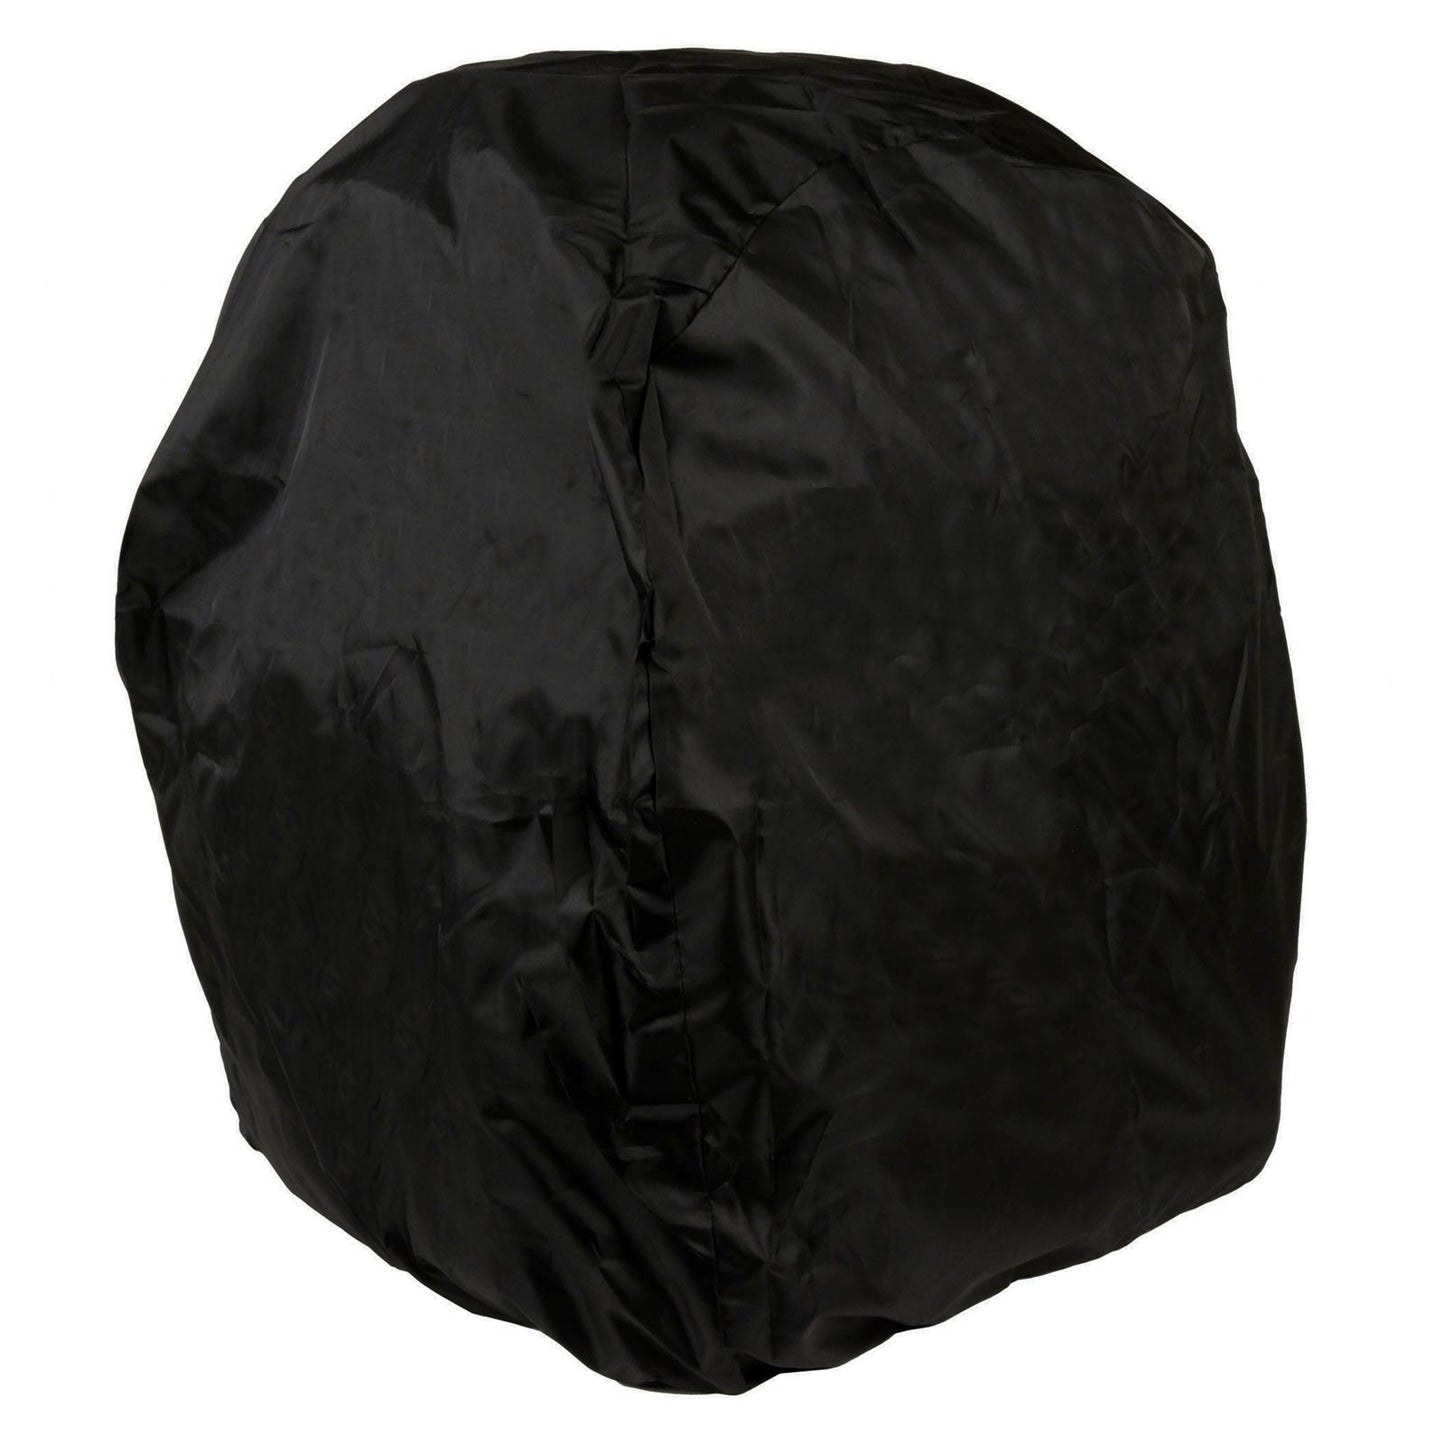 Milwaukee Leather SH689 Large Black Textile Waterproof Touring Motorcycle Sissy Bar Bag